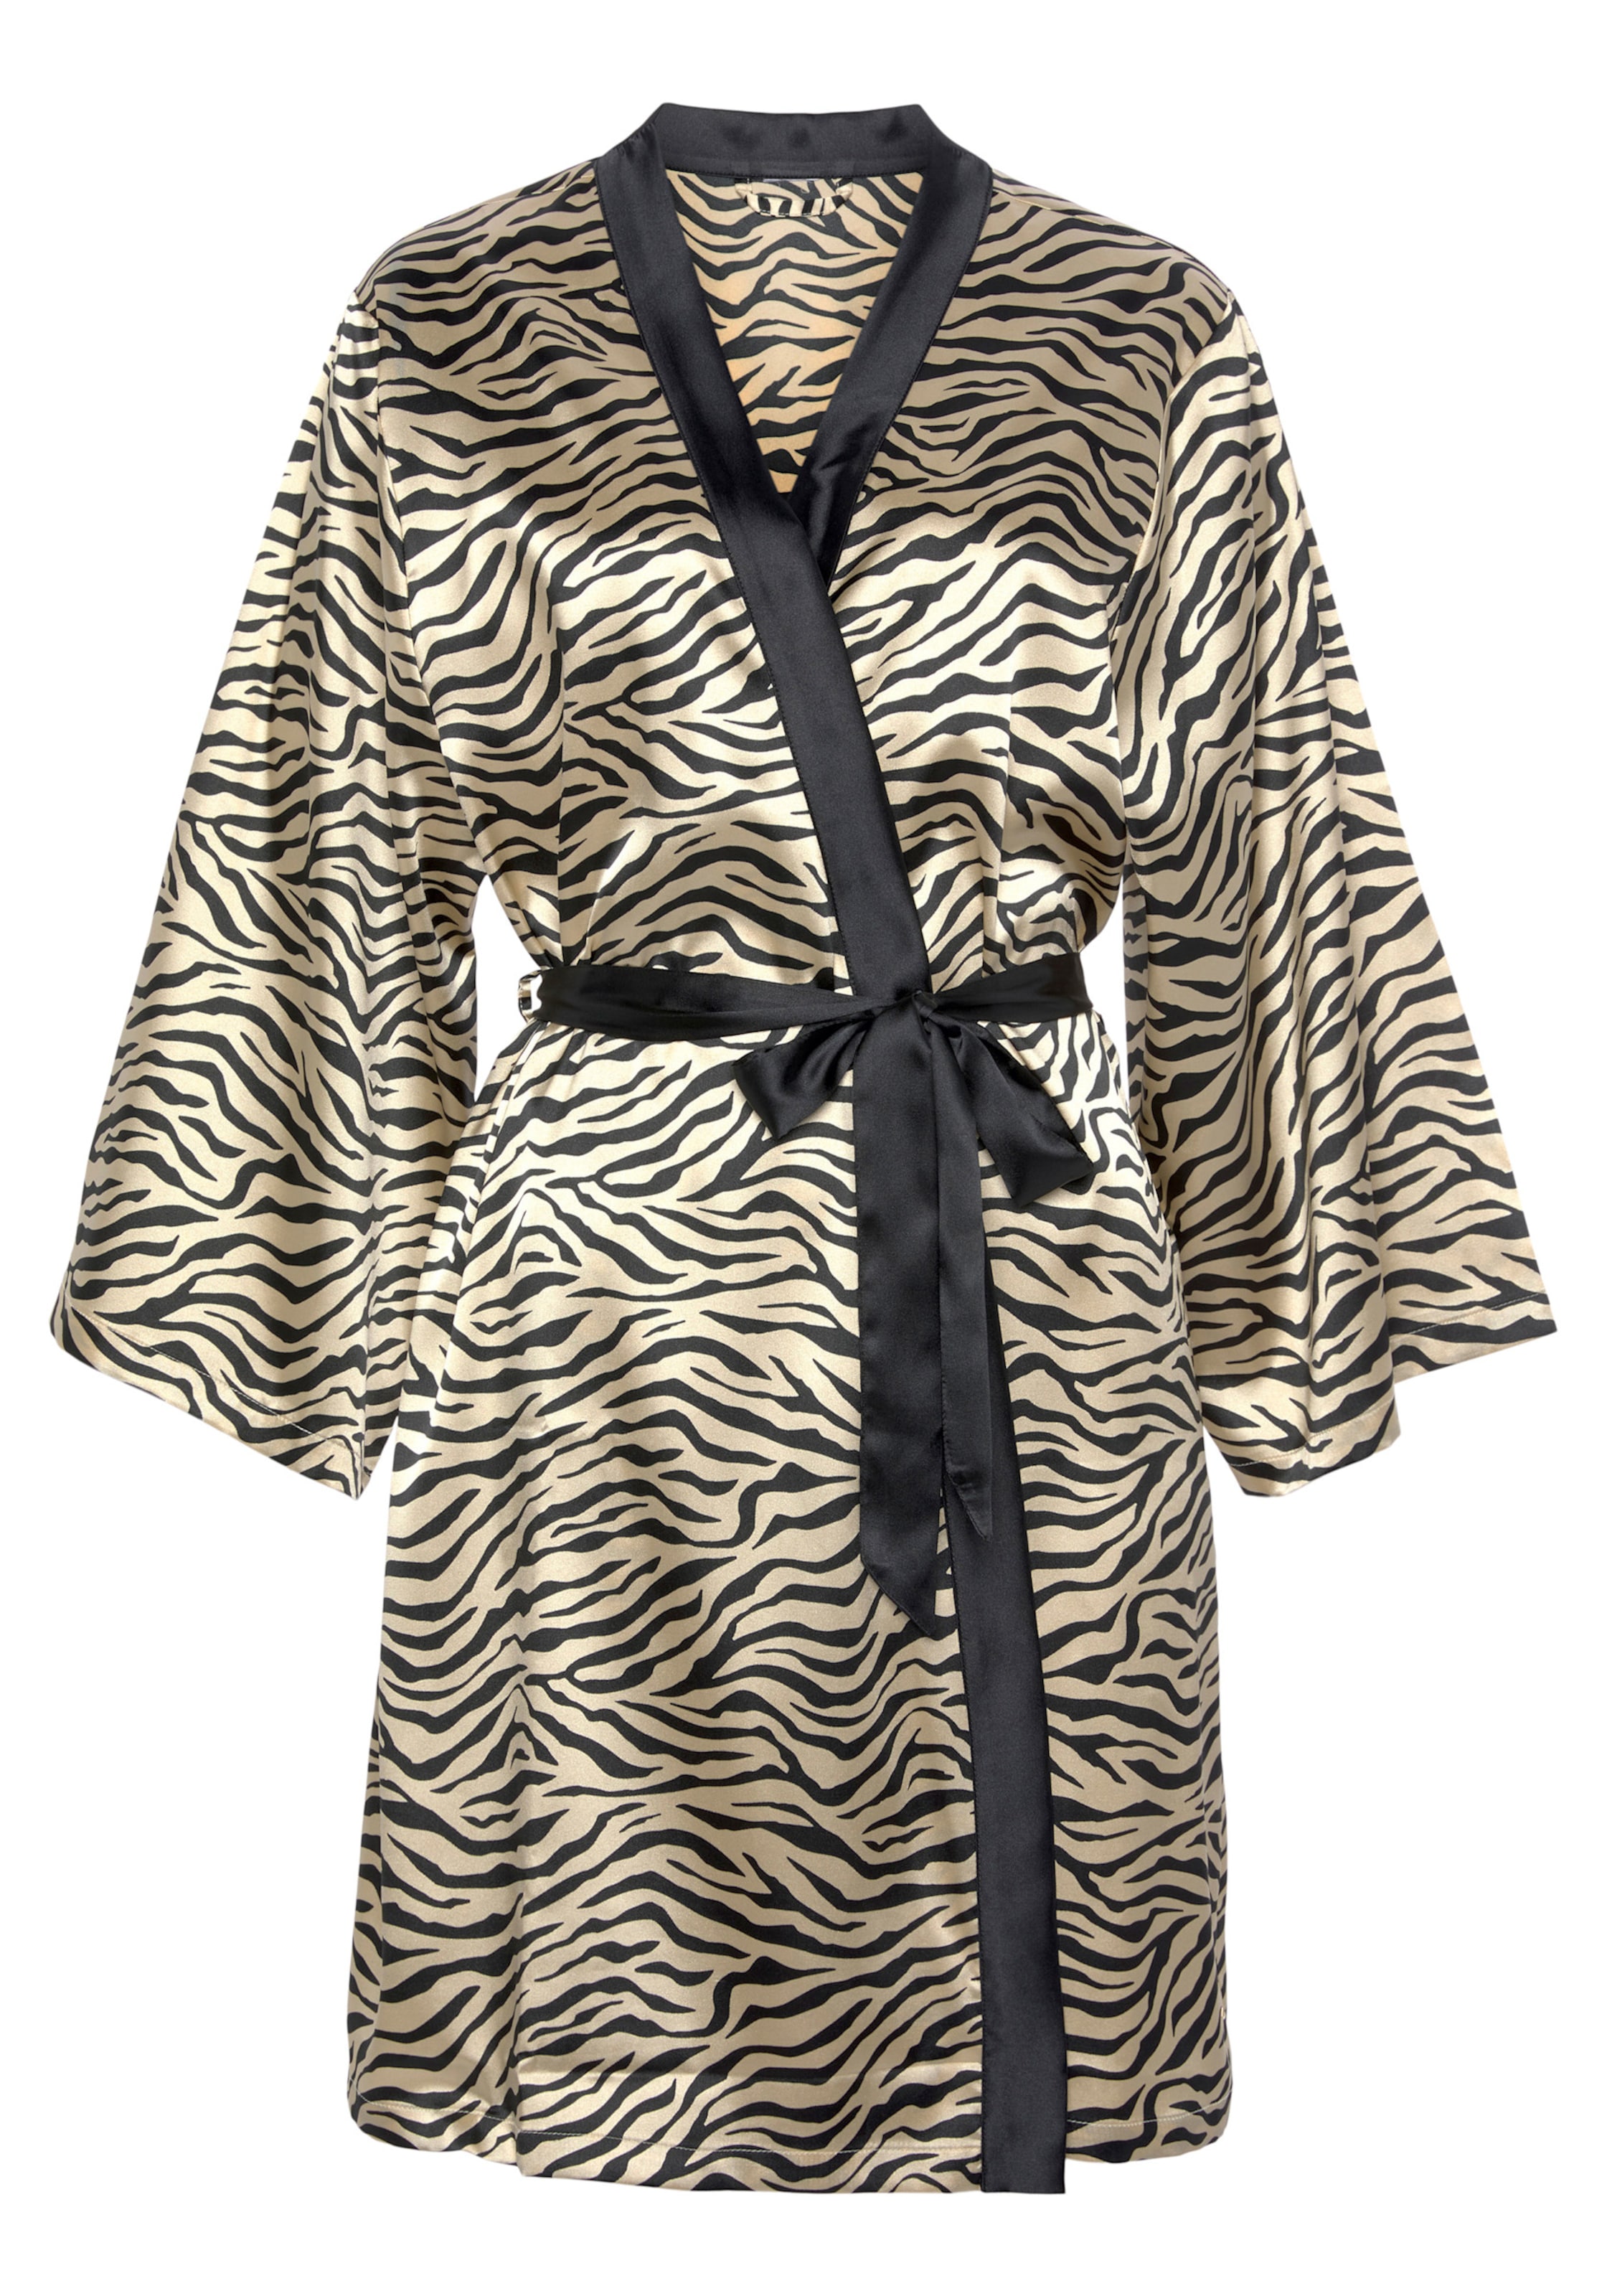 aus Polyester günstig Kaufen-Kimono in tiger-print von Buffalo. Kimono in tiger-print von Buffalo <![CDATA[Kimono mit Kontrast Taillenband. Angenehme Satin-Polyesterqualität. Aus 95% Polyester, 5% Elasthan.]]>. 